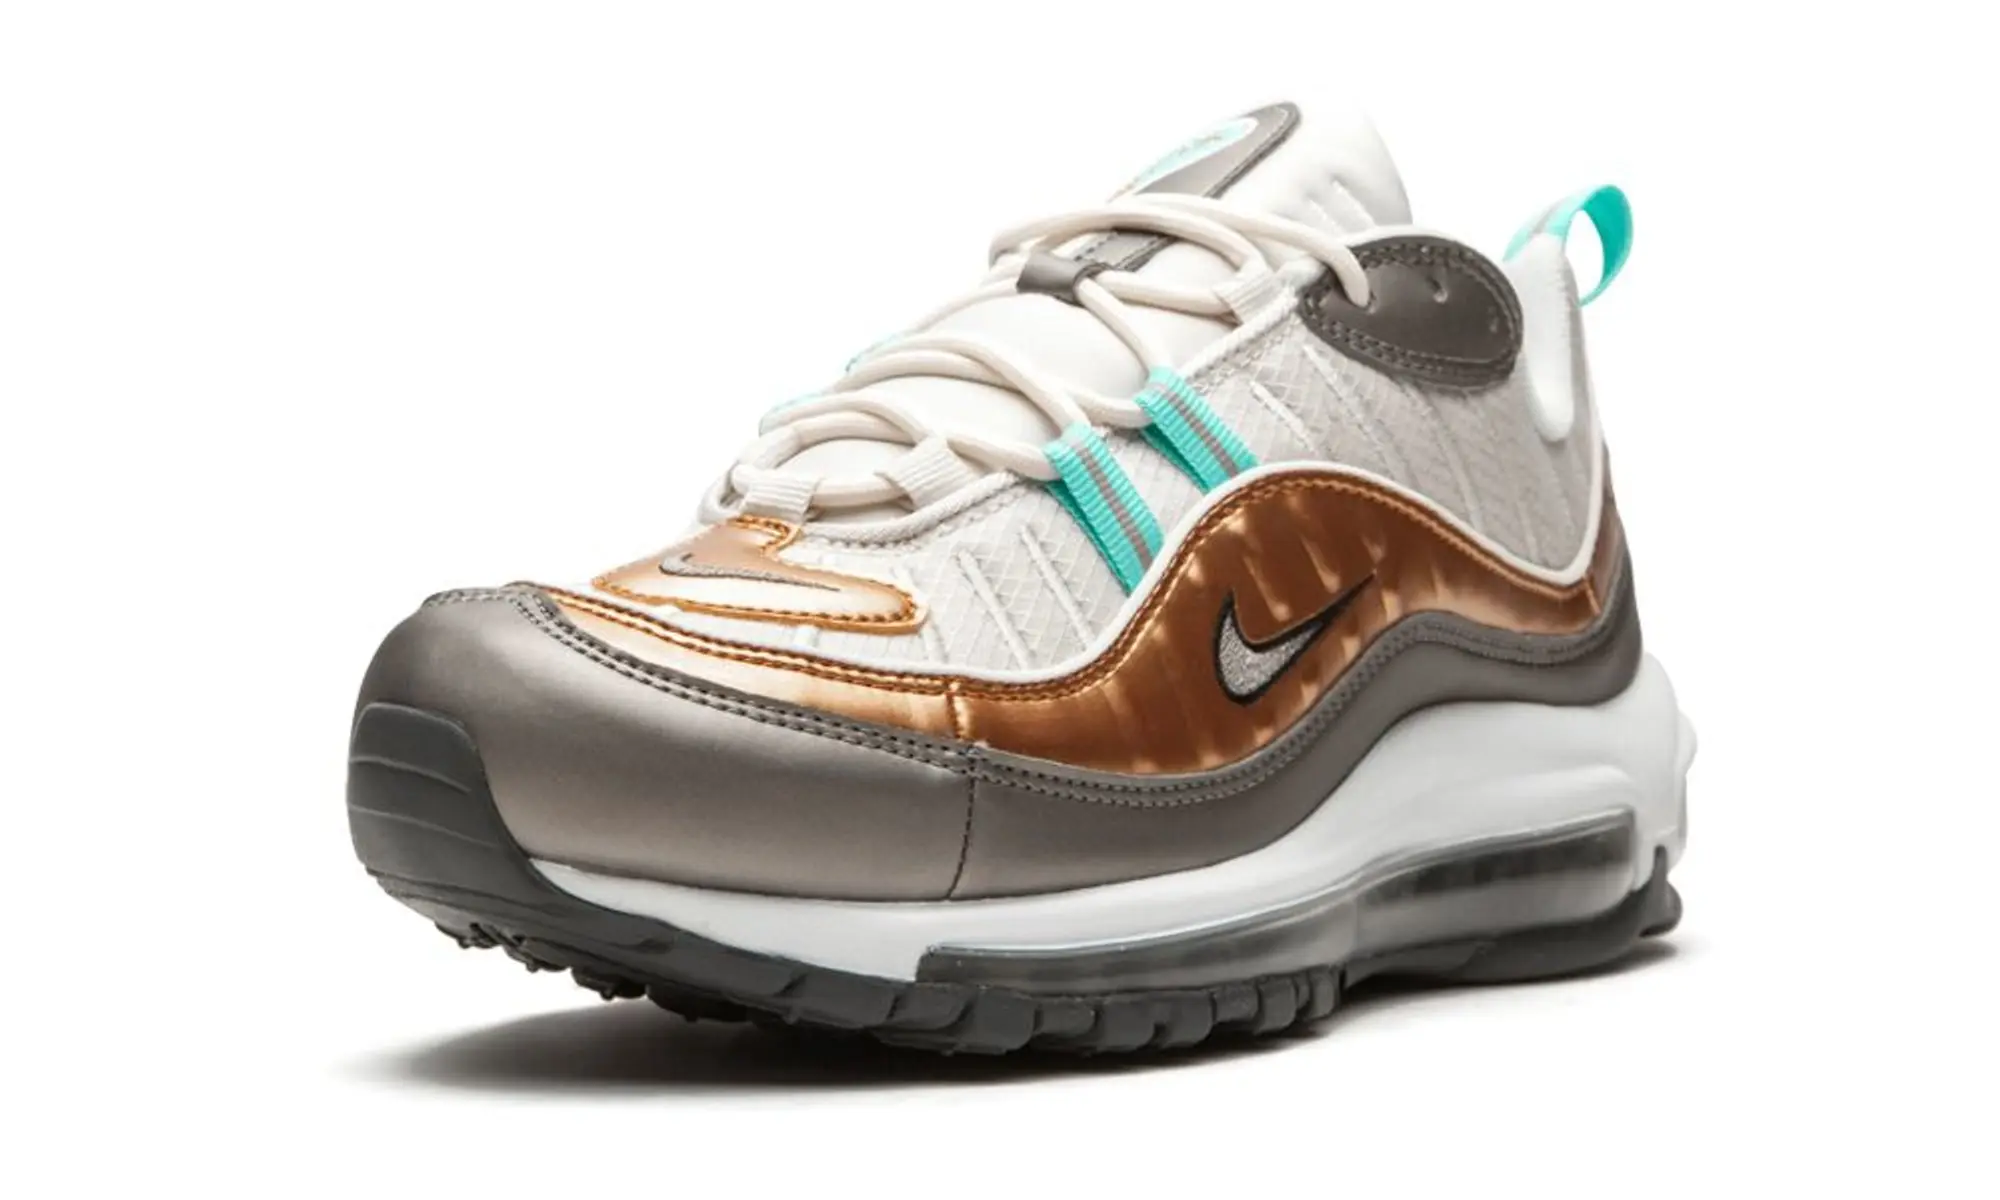 Nike Air Max 98 Womens Copper/Teal Shoes